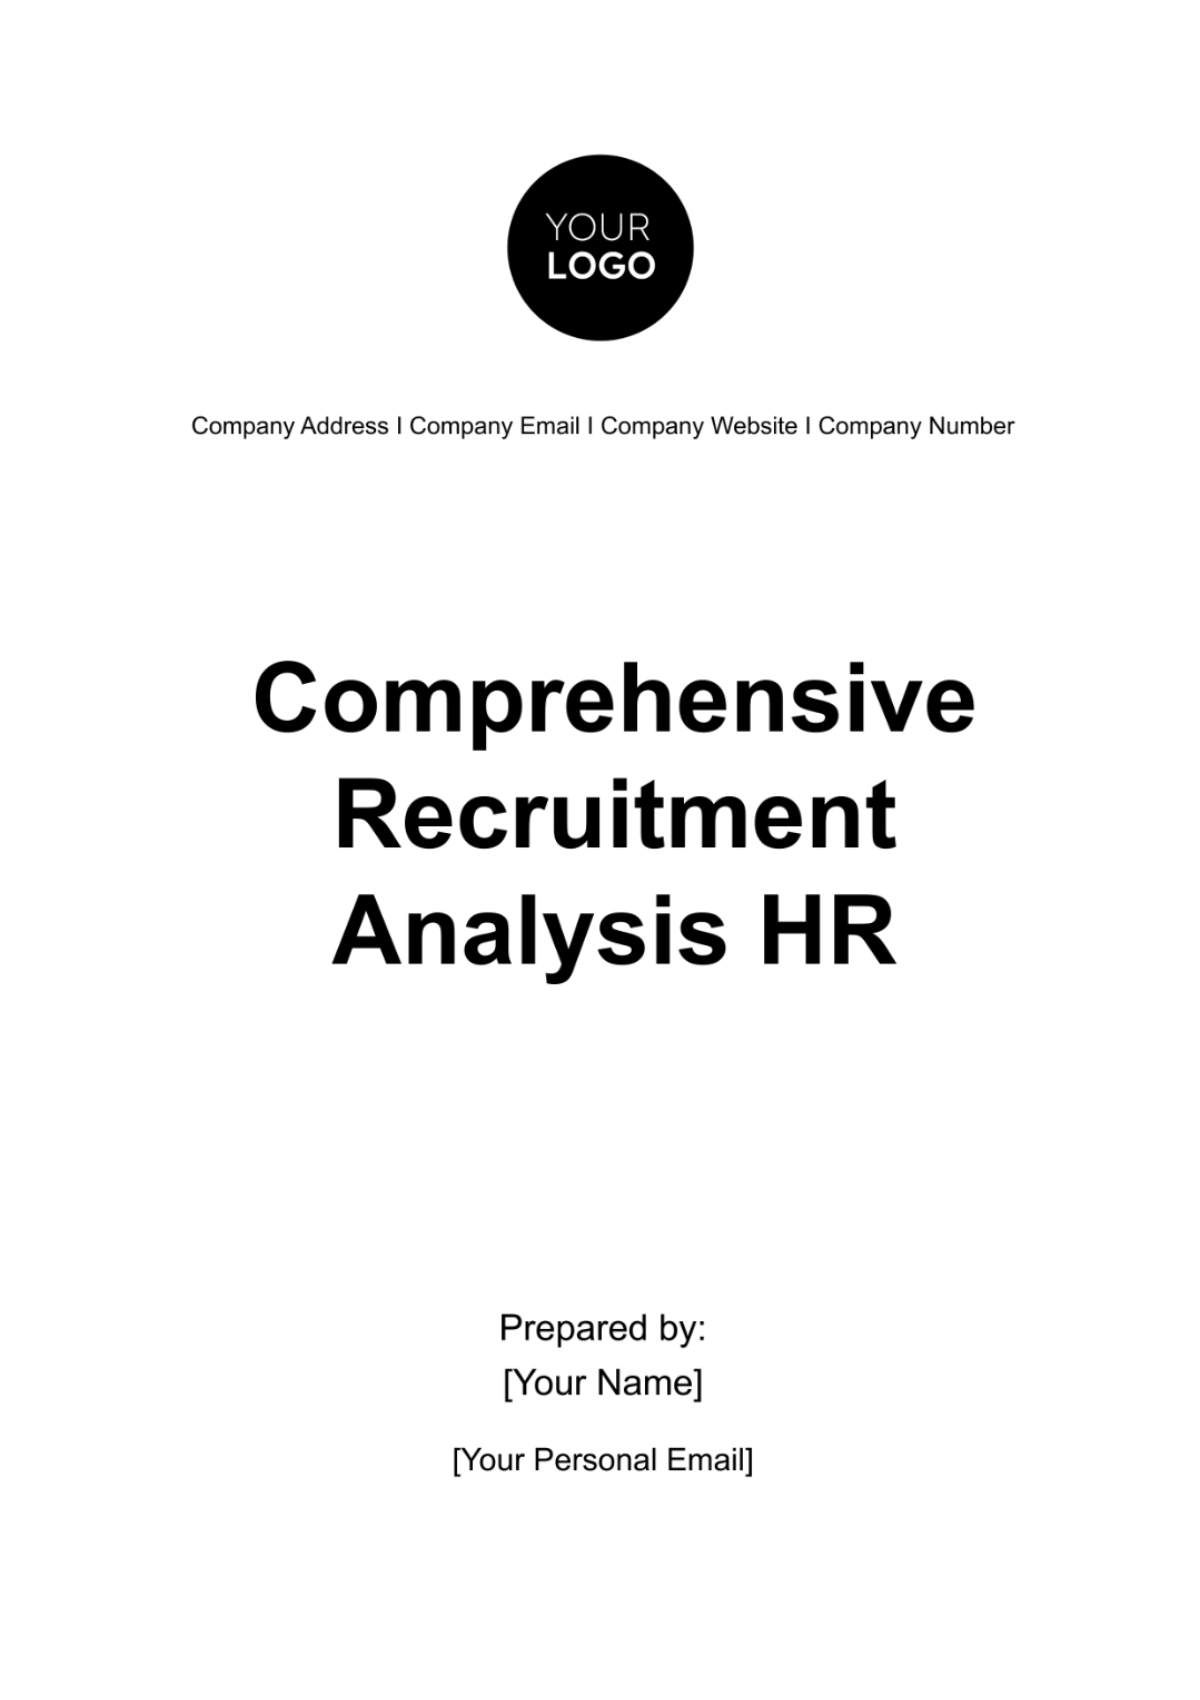 Comprehensive Recruitment Analysis HR Template